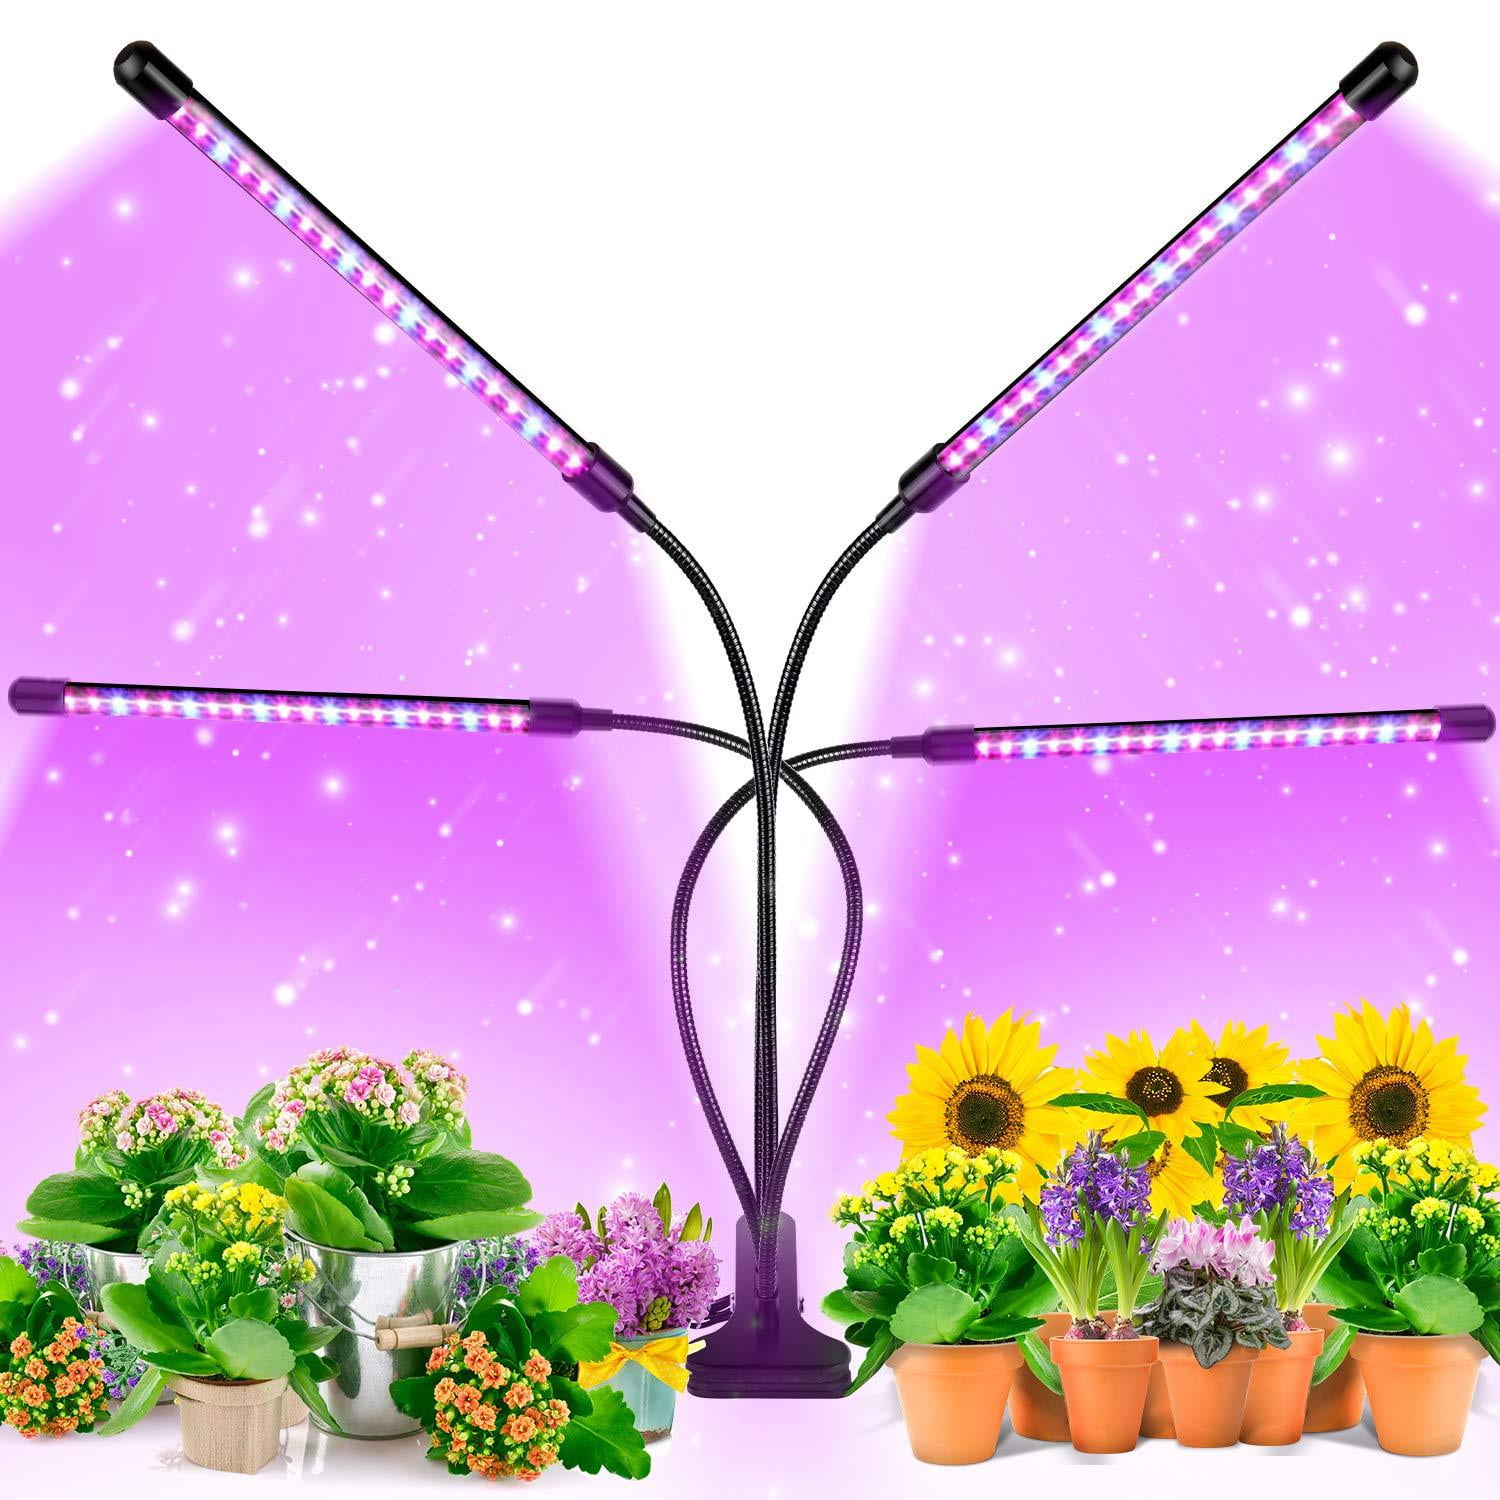 Details about   Waterproof LED Grow Light Strip Full Spectrum Lamp for Indoor Plant Veg Flower 